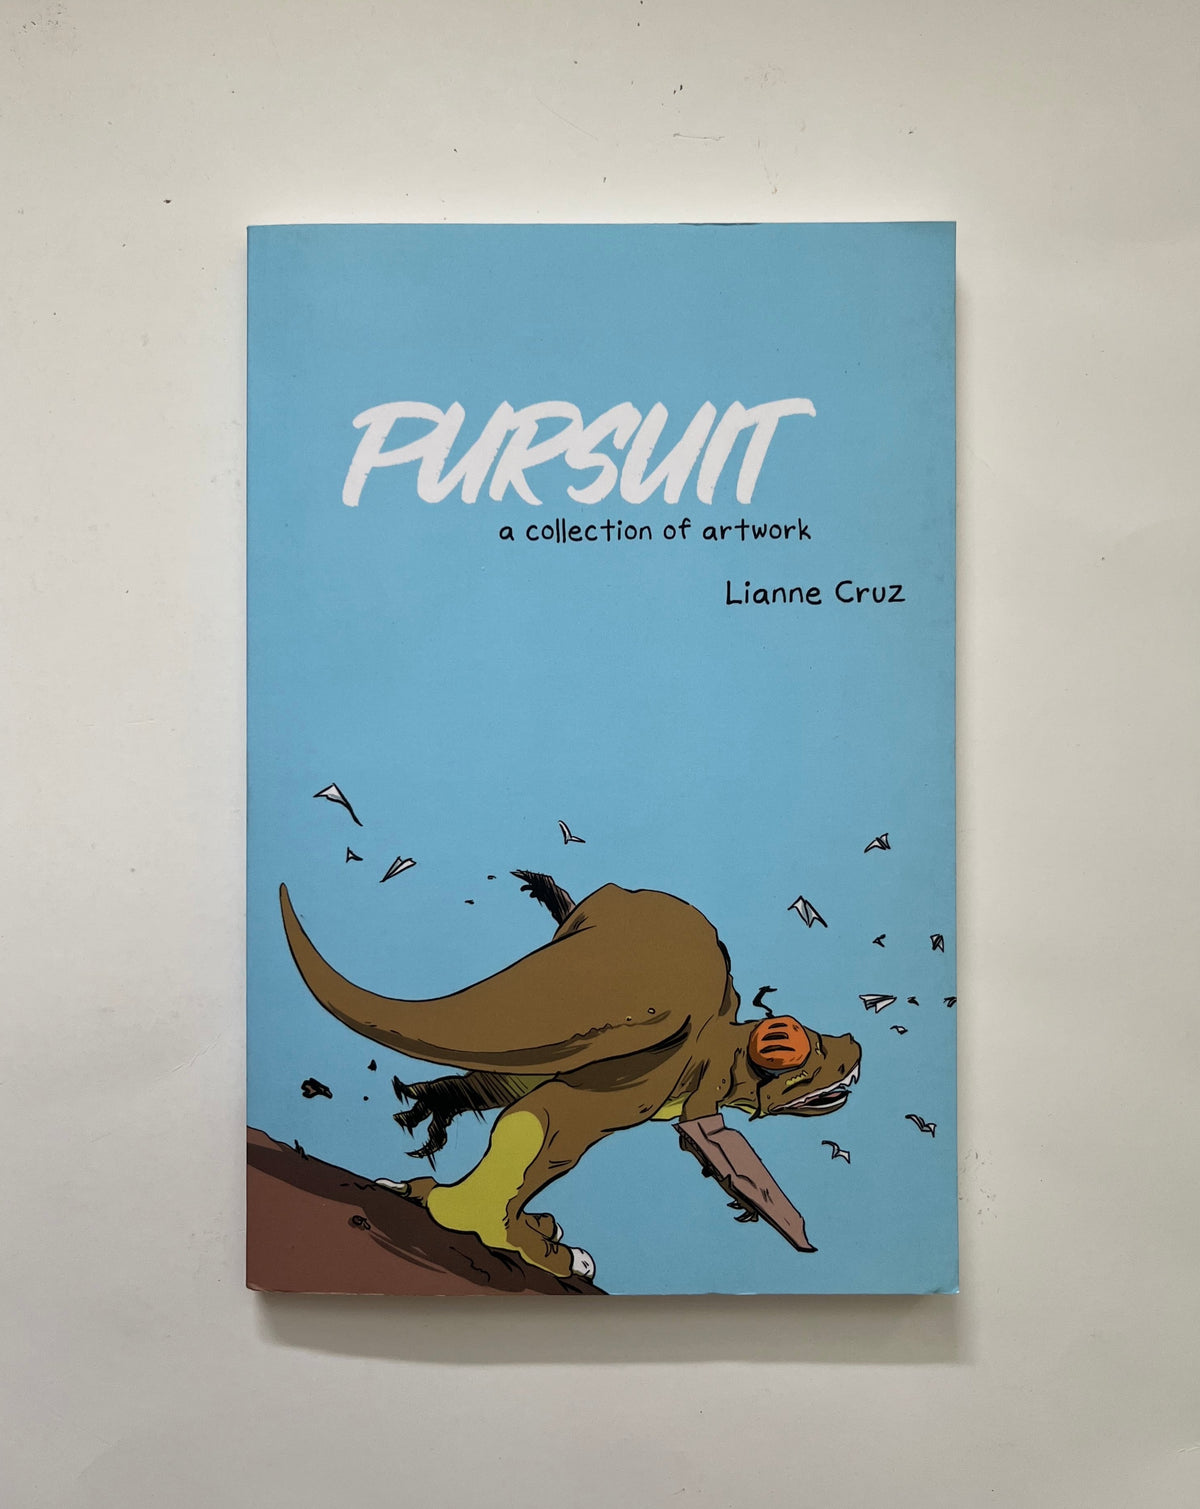 Pursuit: A Collection of Artwork by Lianne Cruz